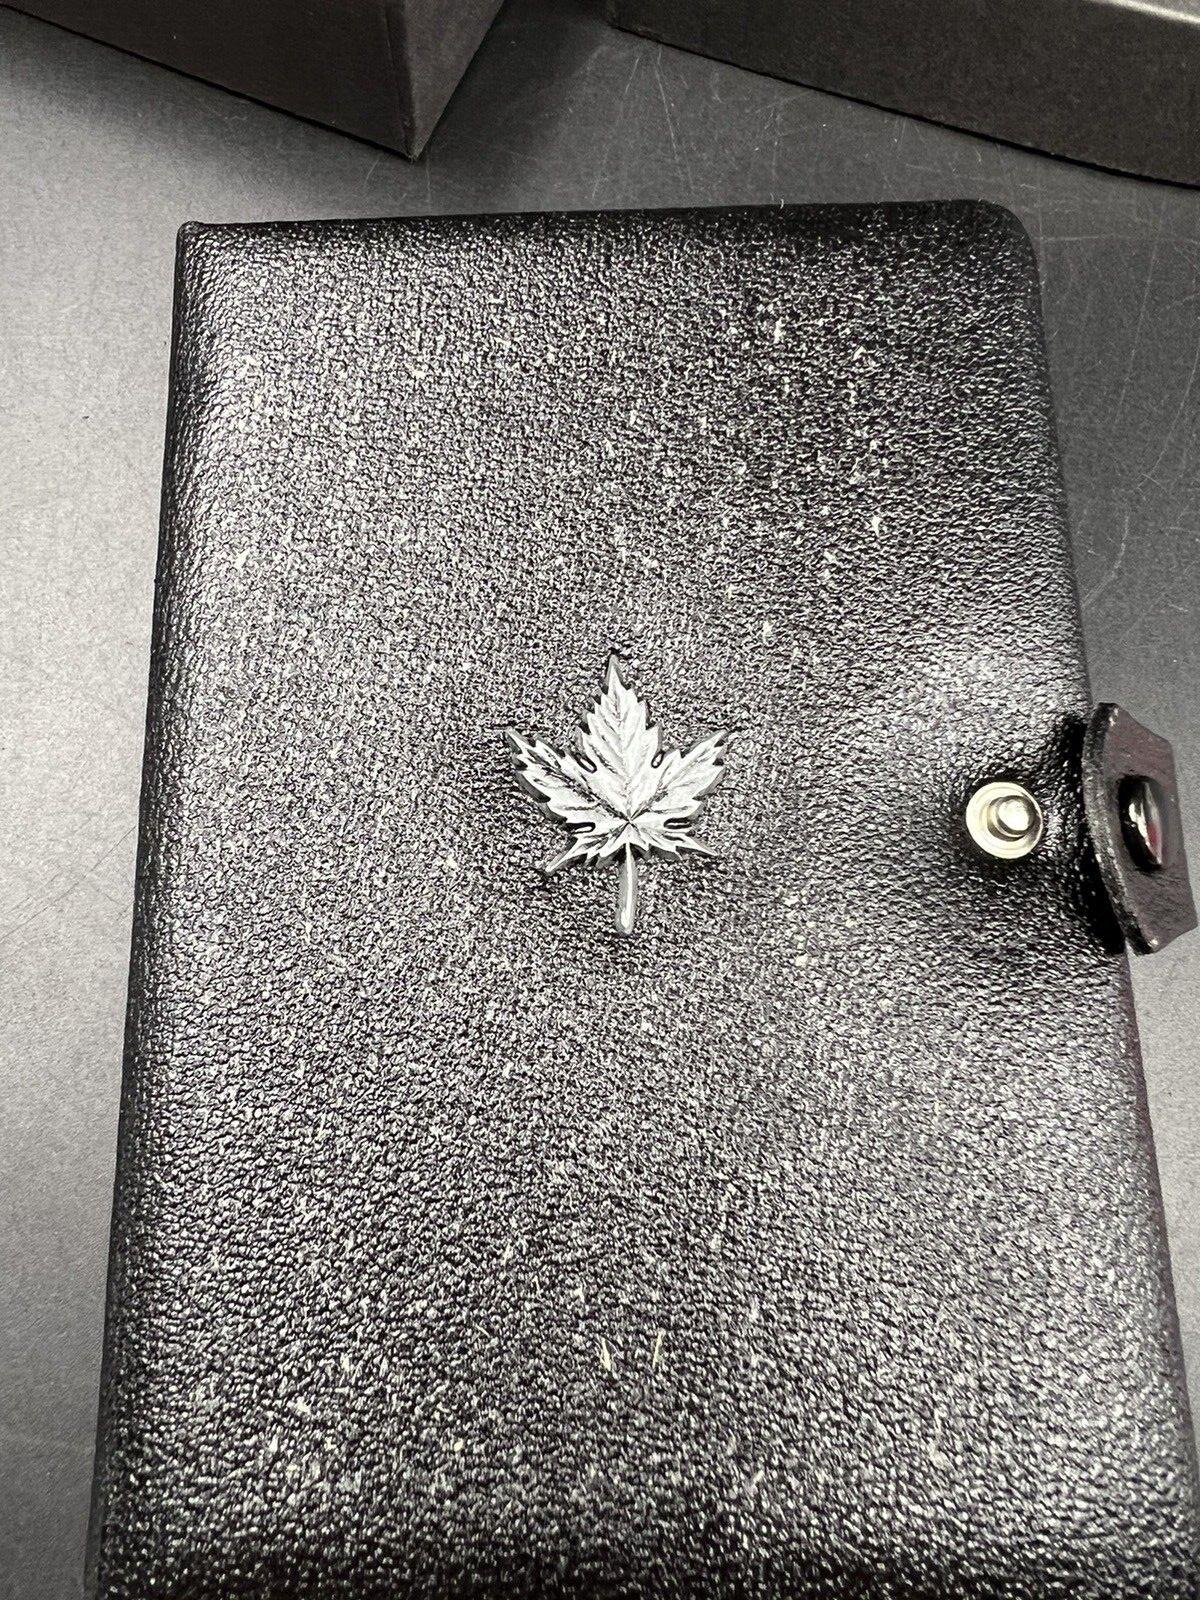 1984 Canada Double Dollar Proof Set Royal Canadian Mint RCM OGP Toronto Commem